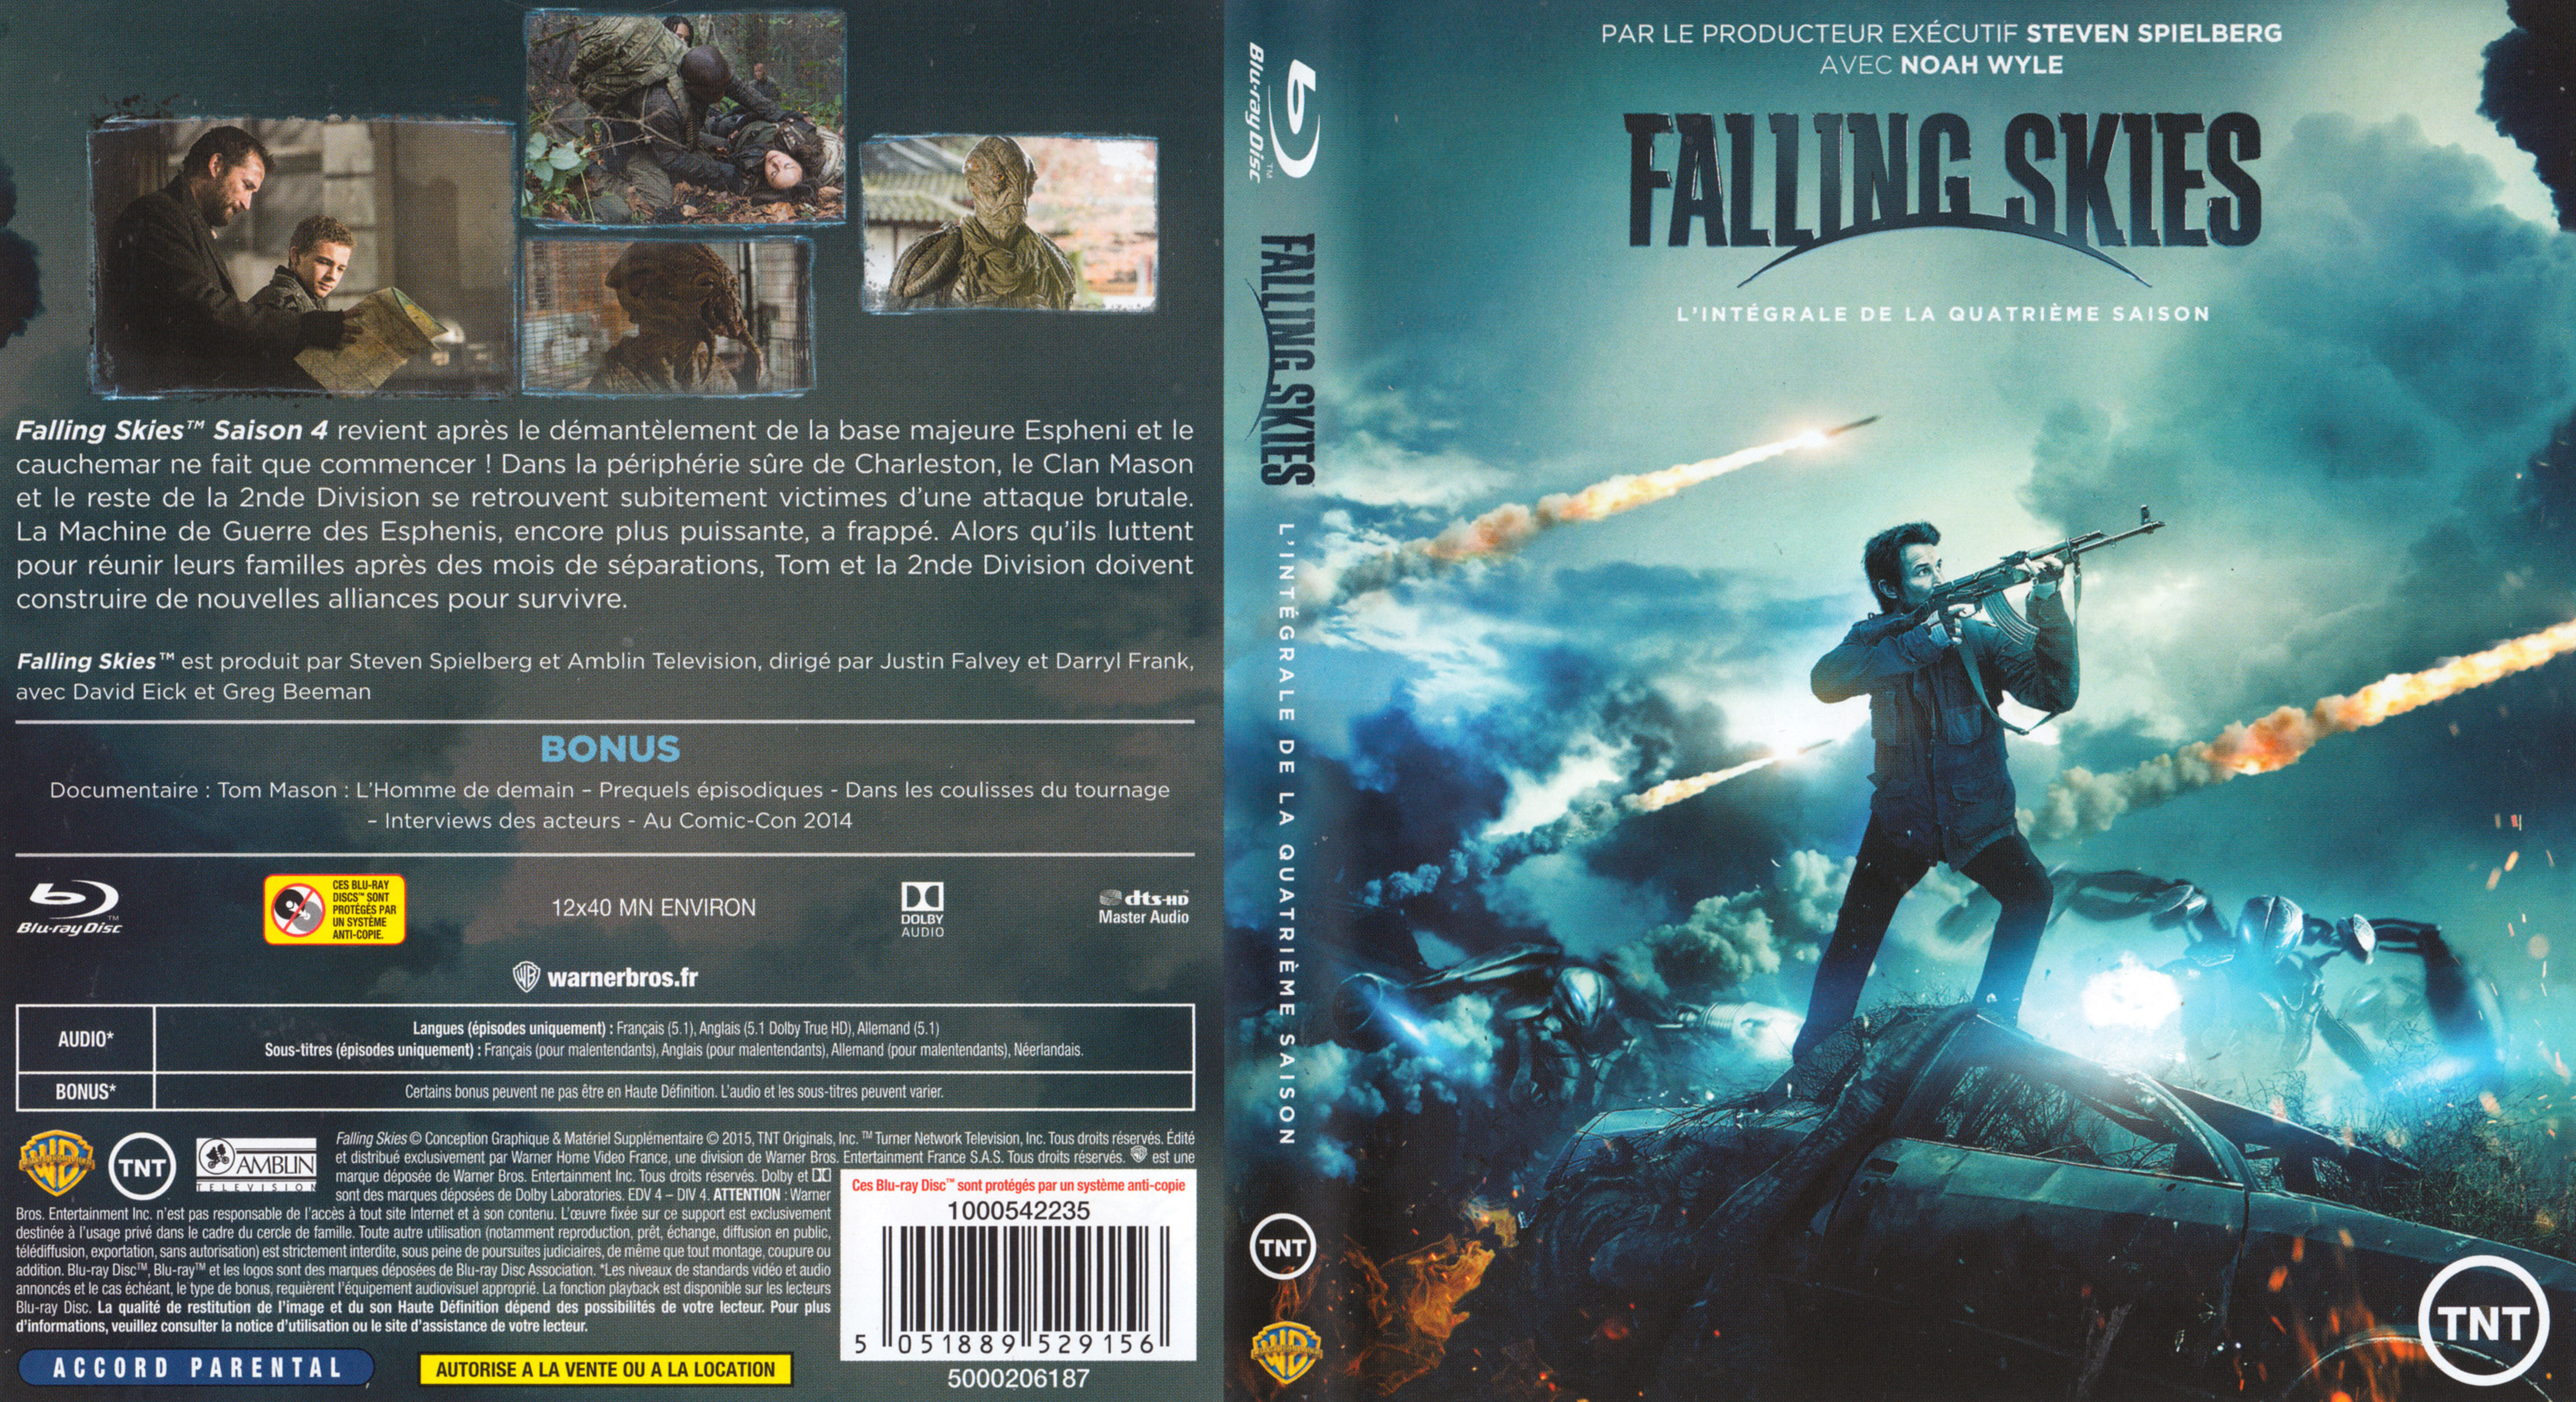 Jaquette DVD Falling Skies Saison 4 (BLU-RAY)